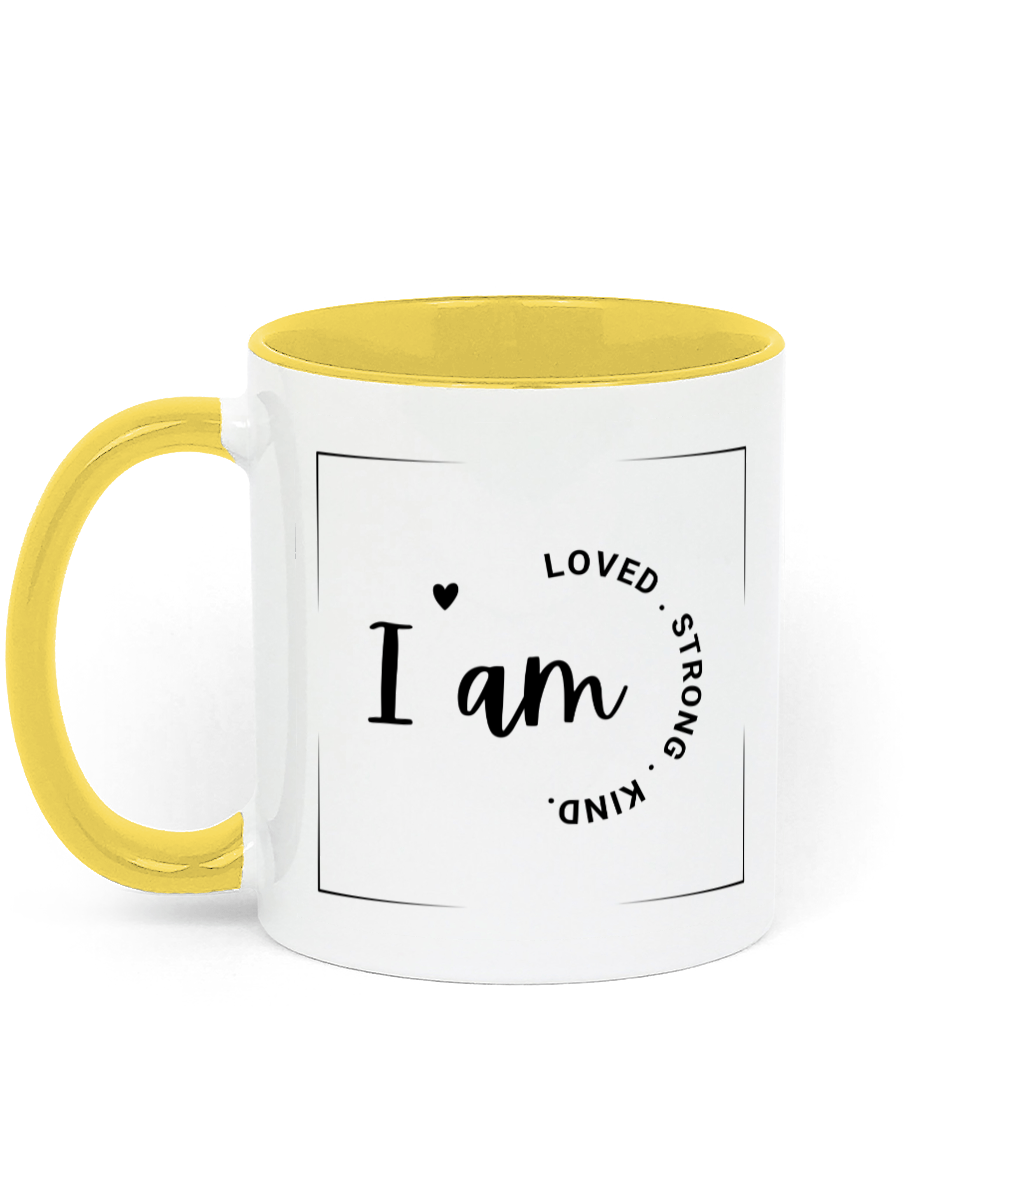 I Am Loved. Strong. Kind.11 oz mug. Daily Affirmations, Motivation, Inspiration. Perfect Gift.